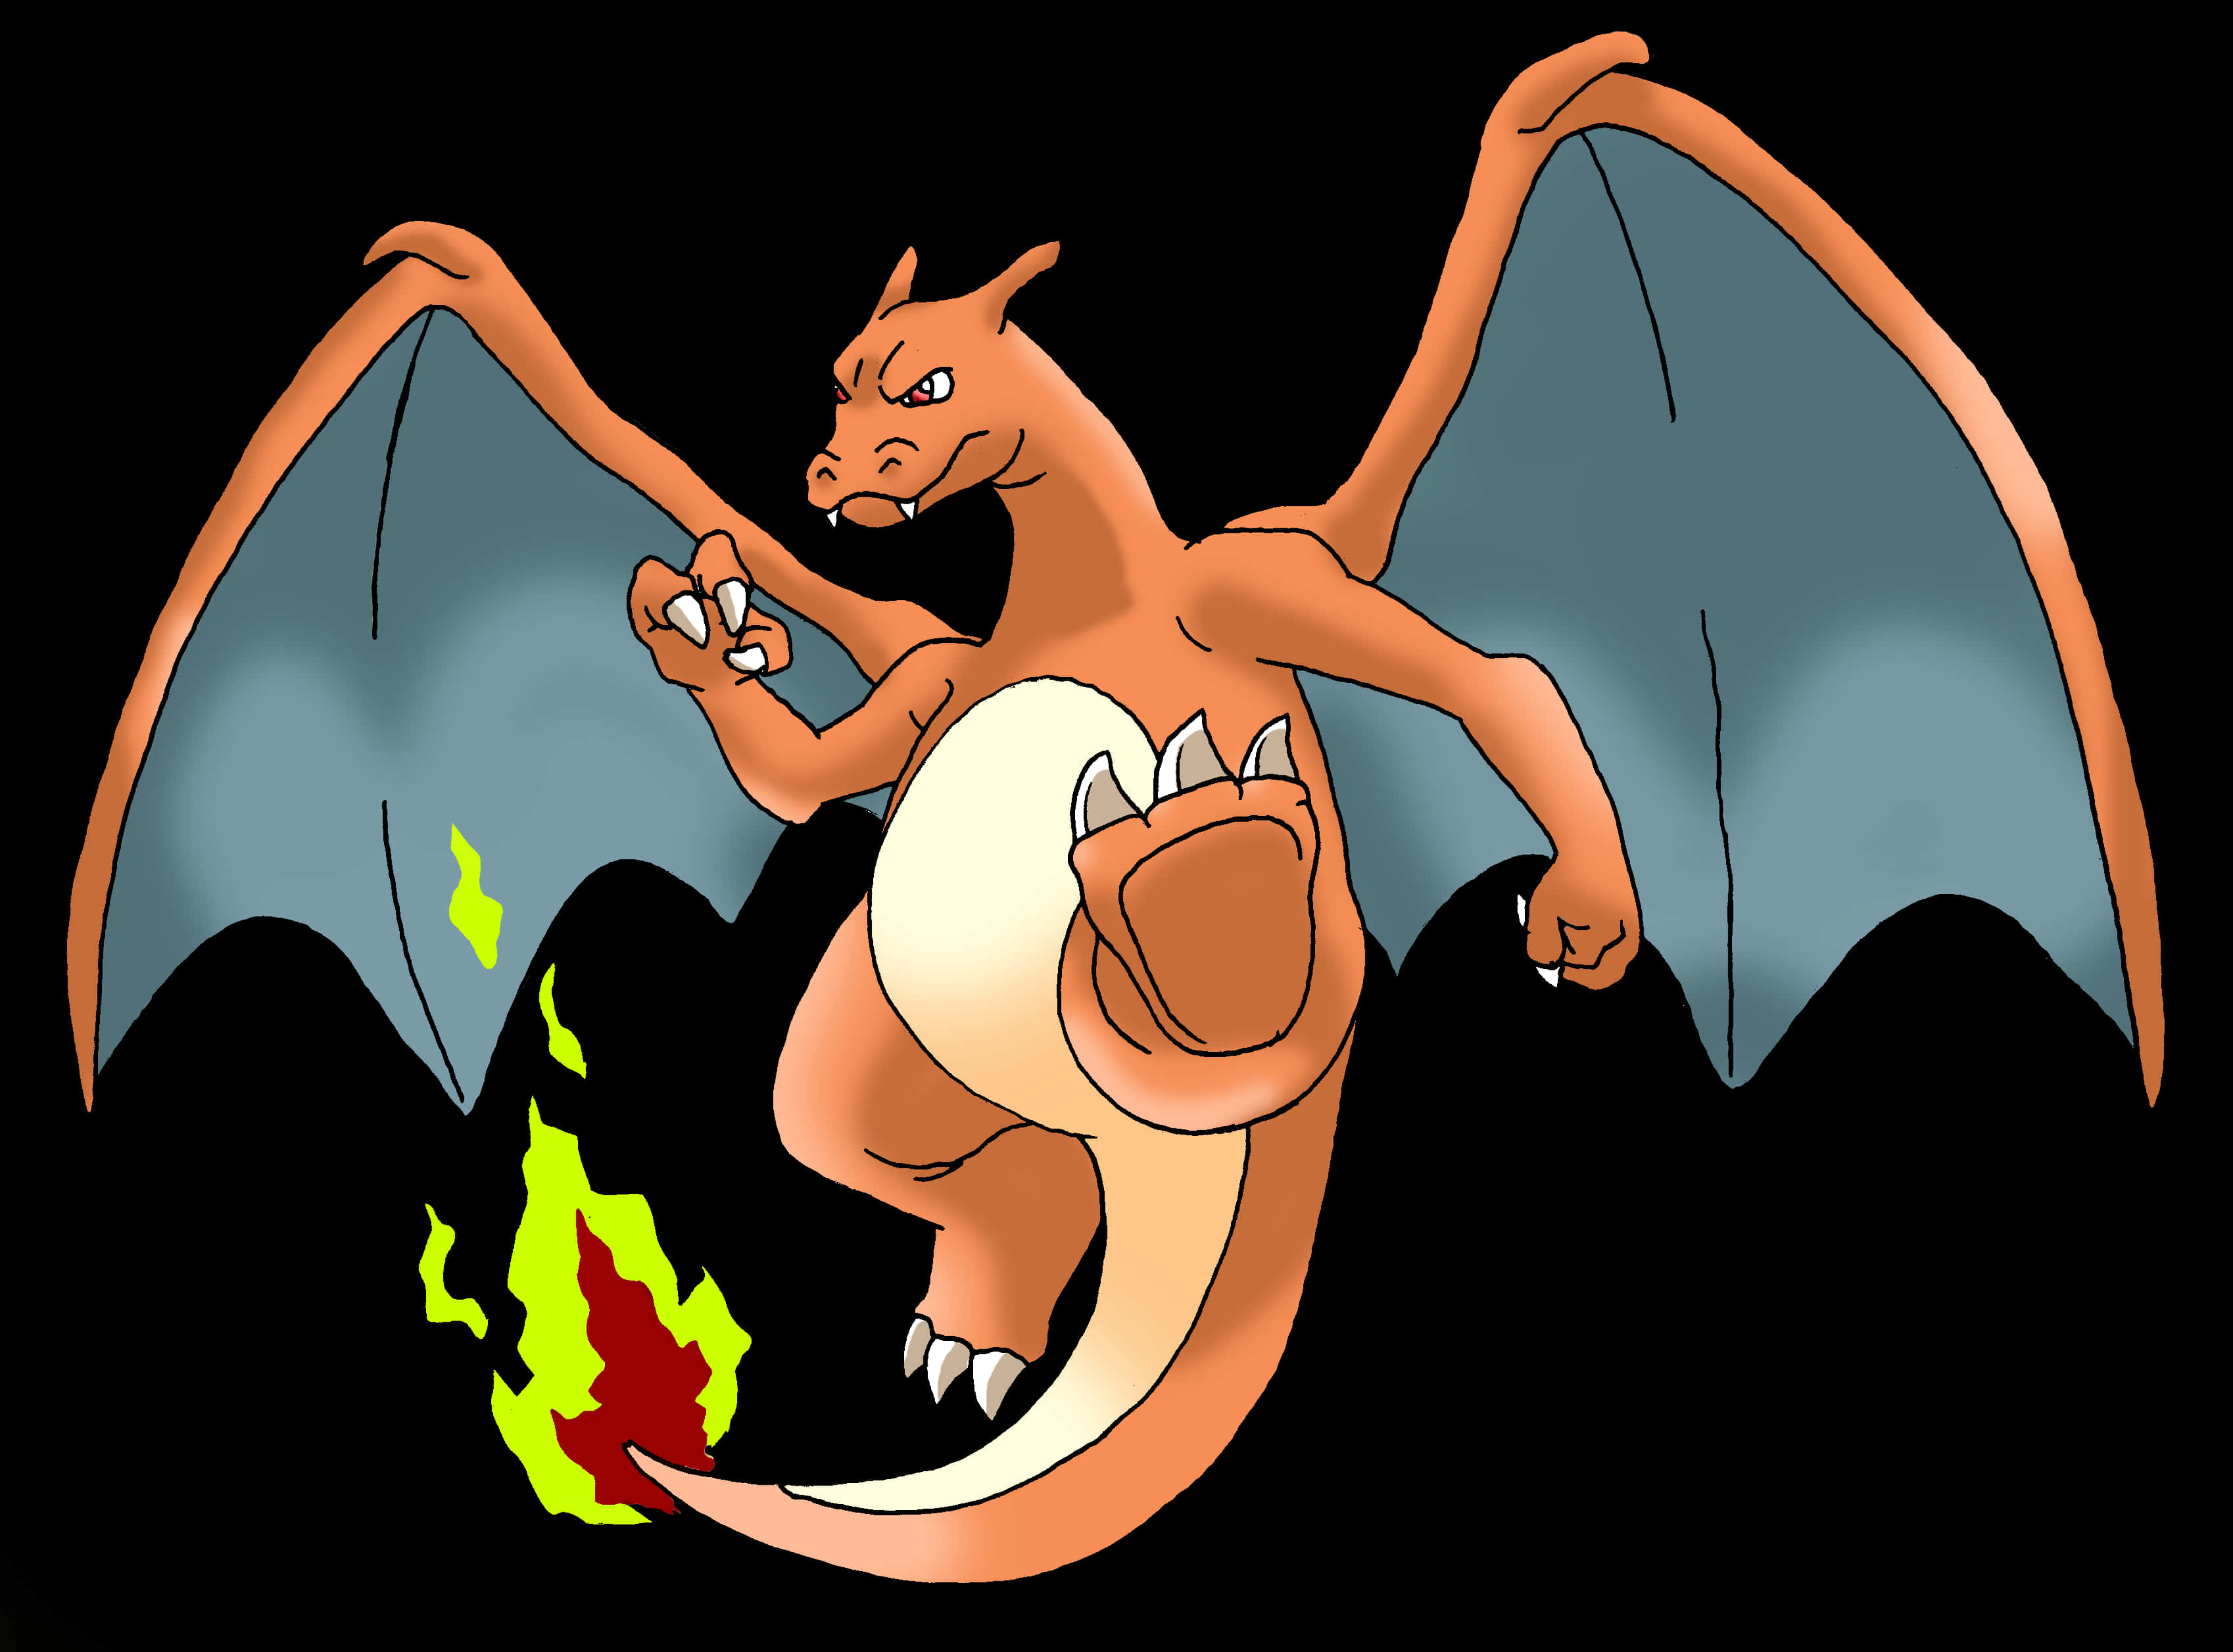 A Cartoon Of A Dragon